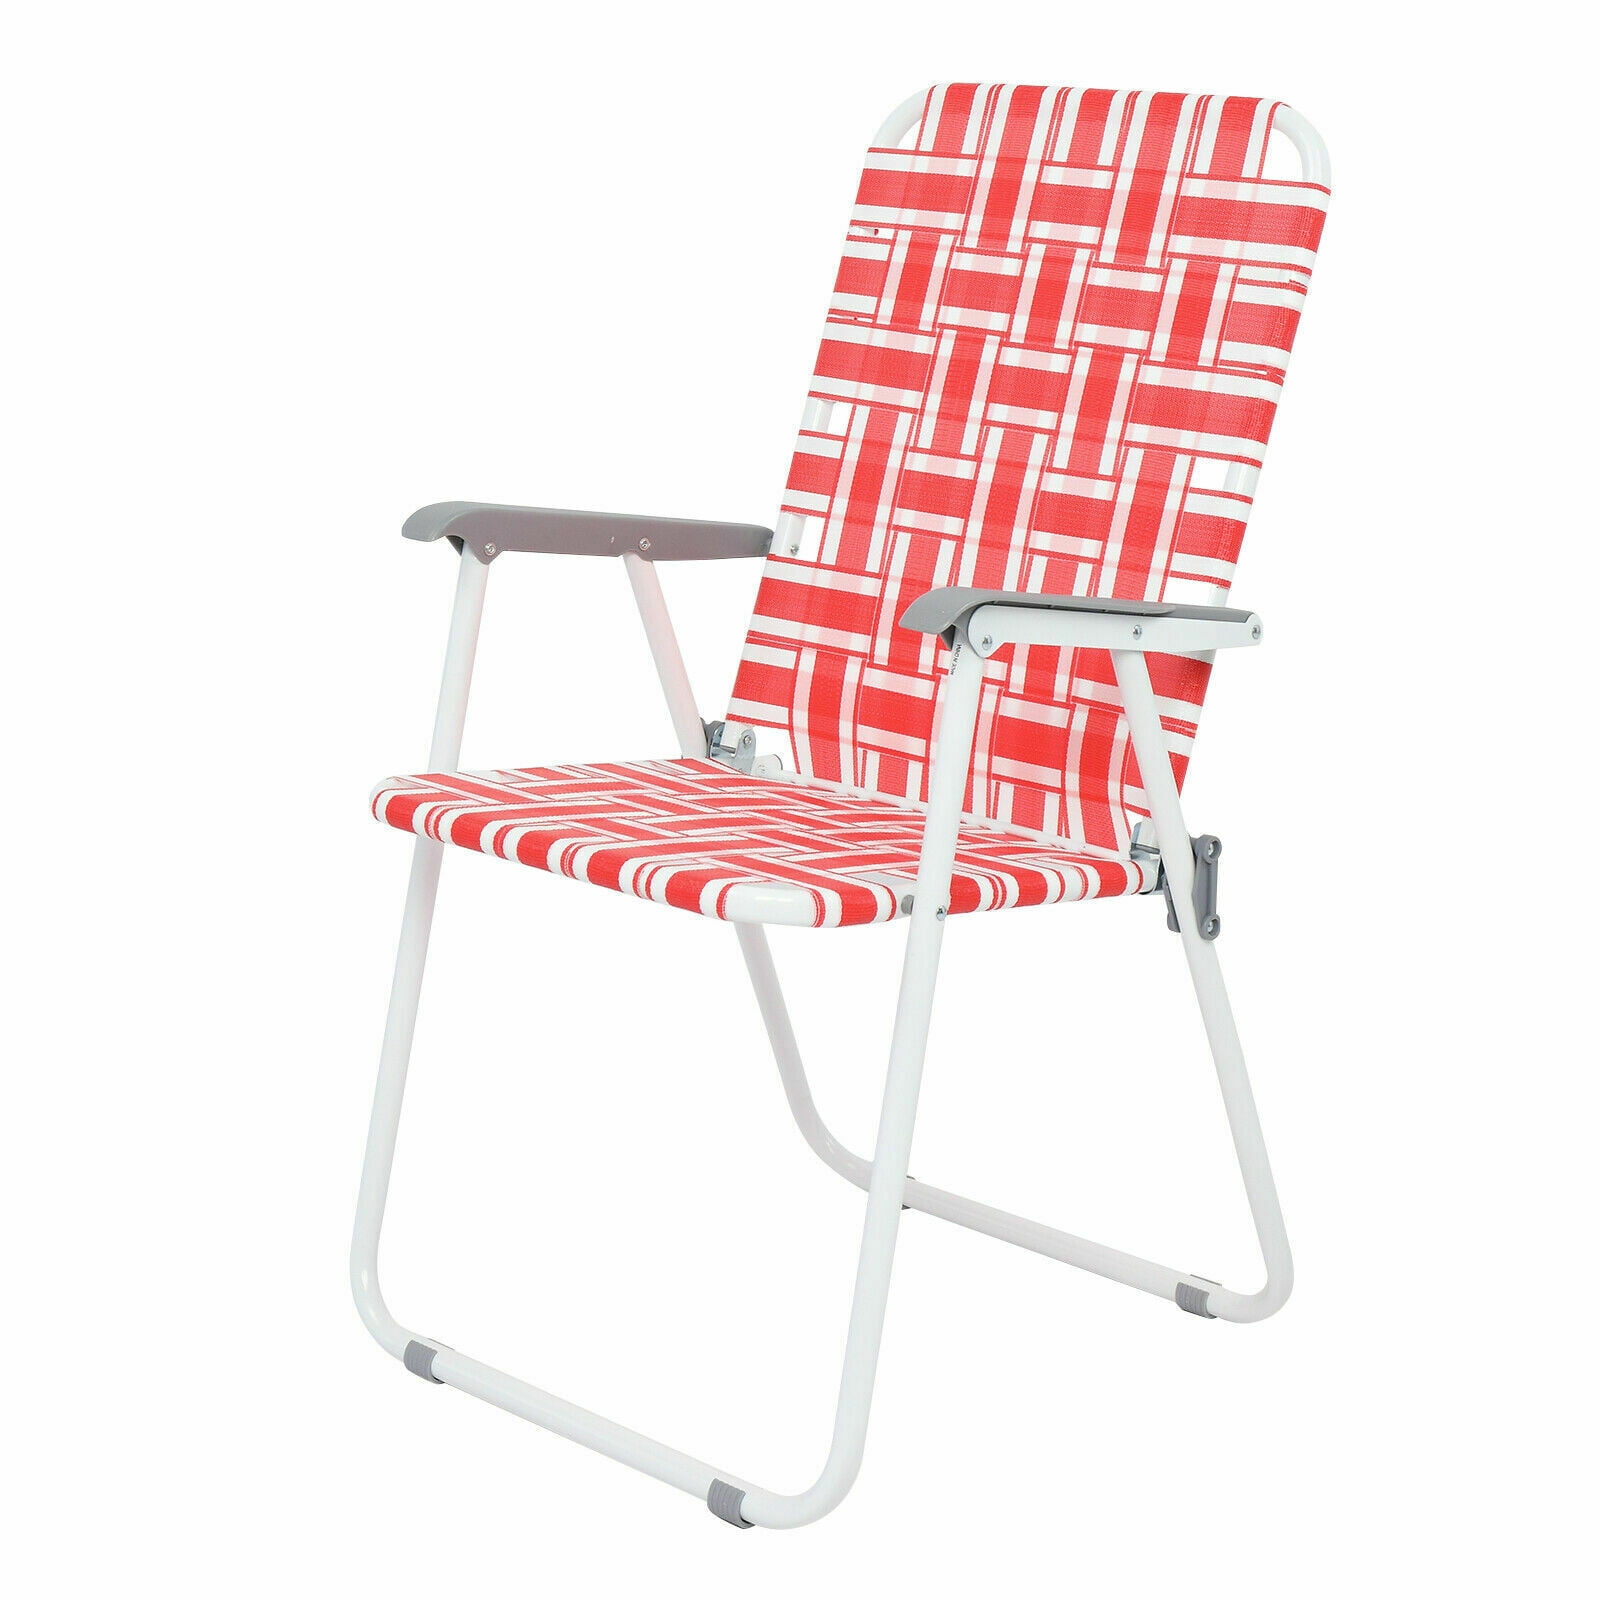 2 Pack Patio Lawn Chairs Webbed Folding Chair Outdoor Beach Chair